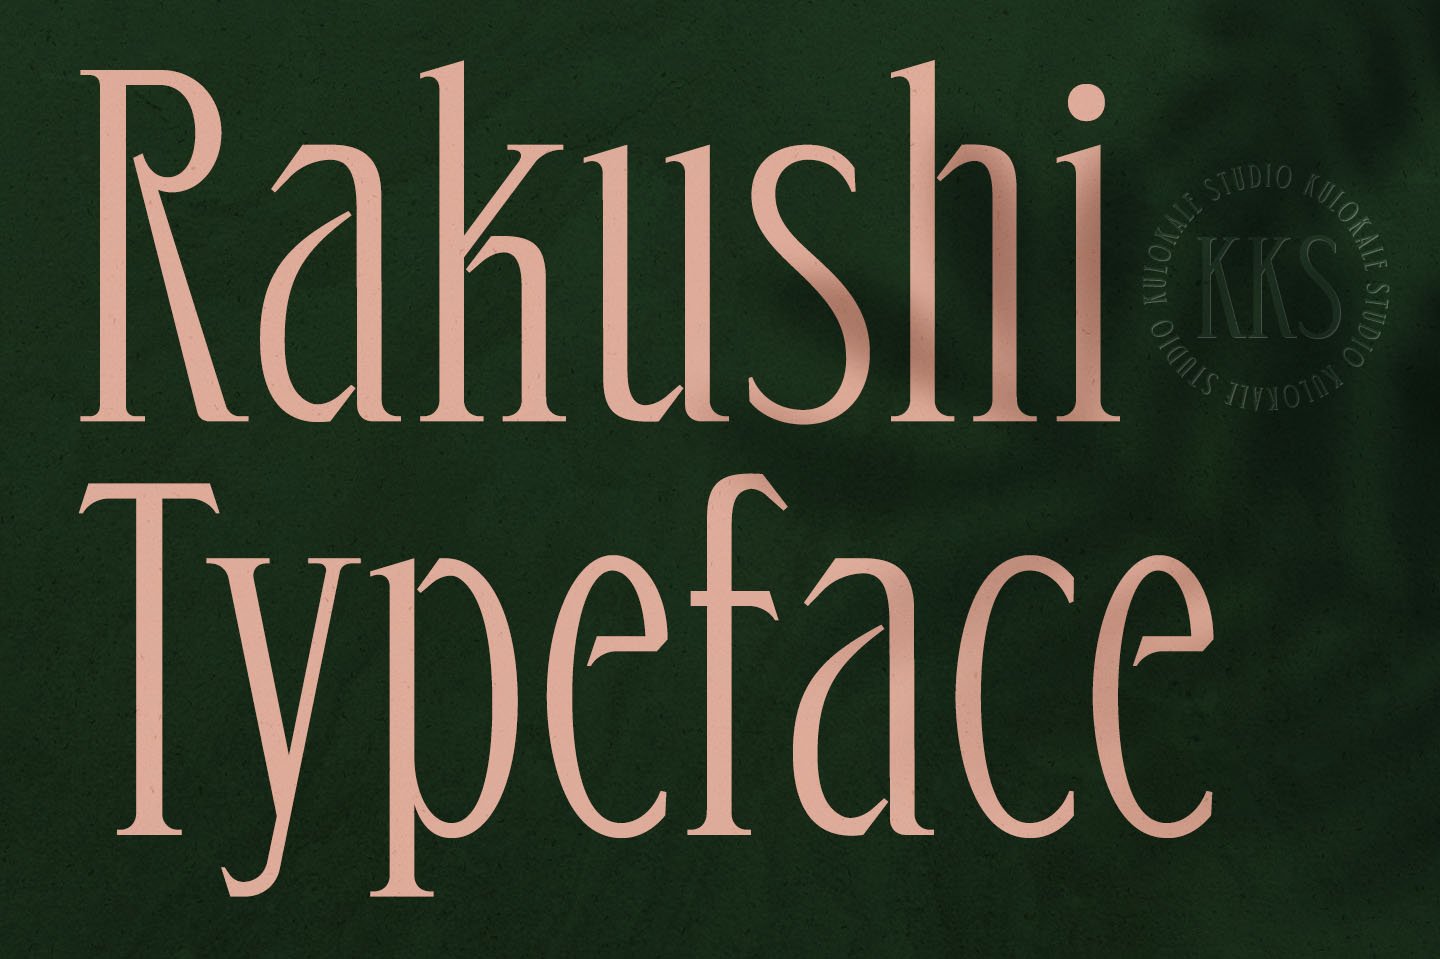 Rakushi Display Serif Font cover image.